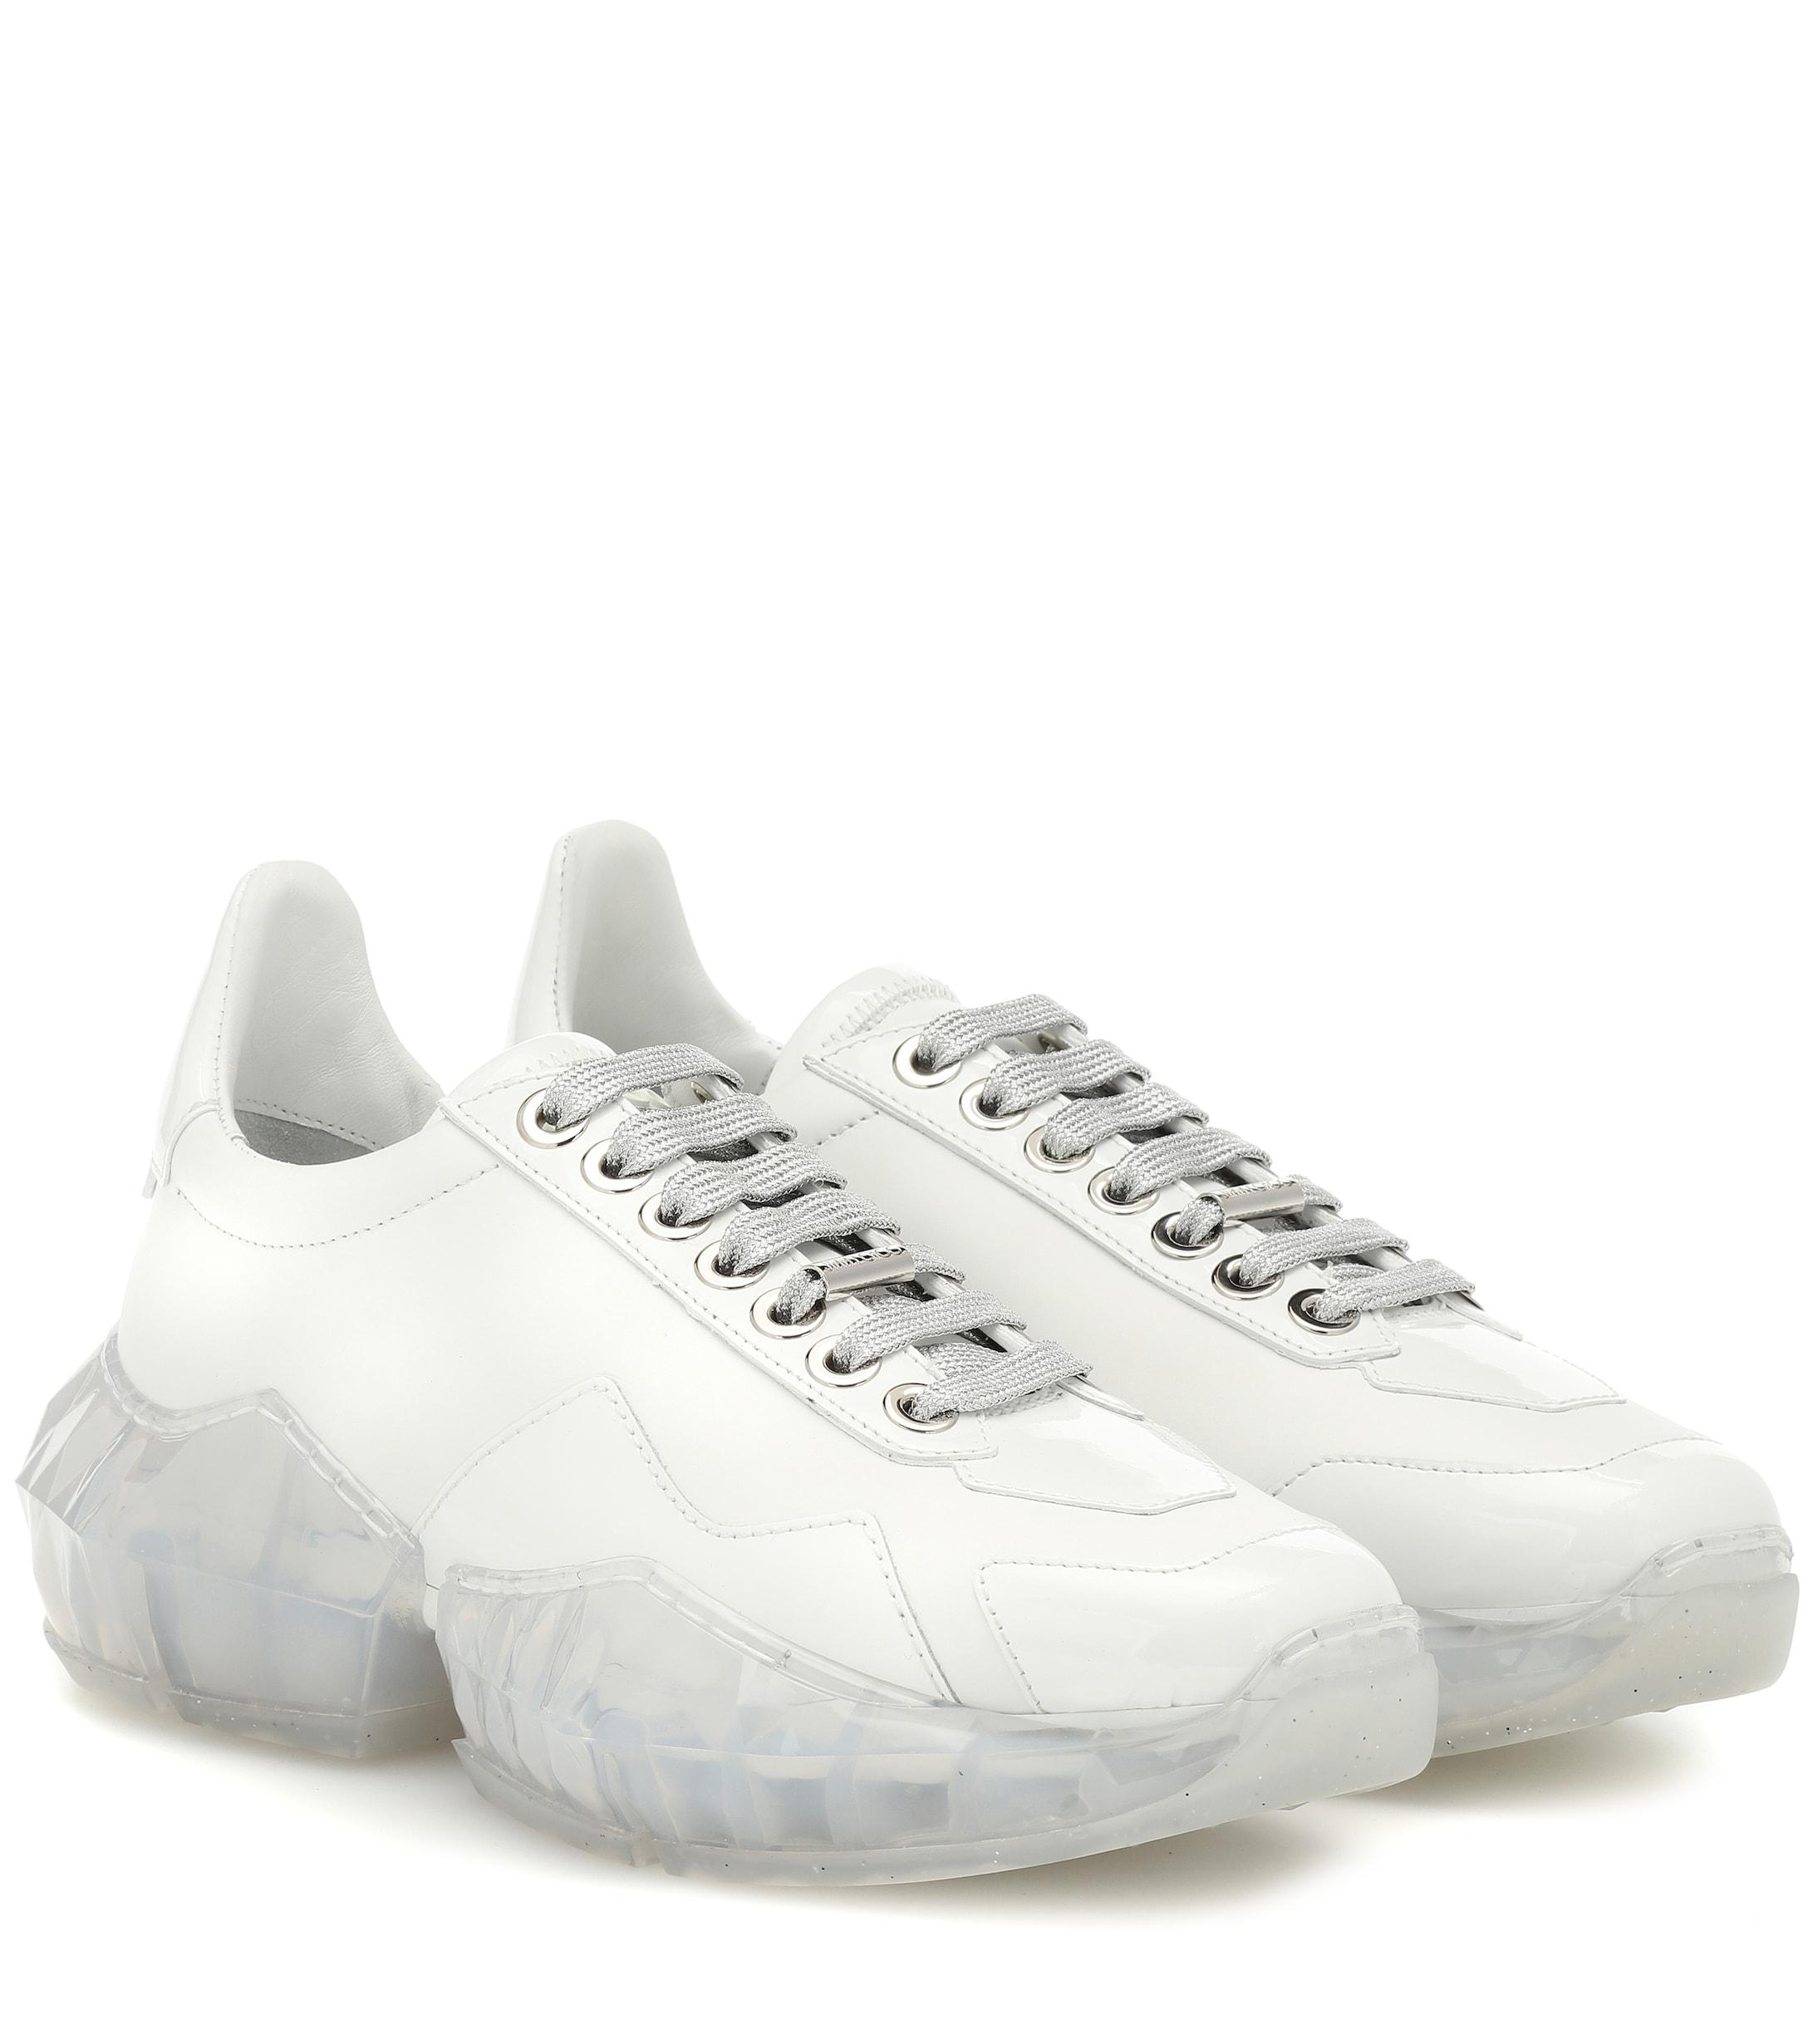 Jimmy Choo Diamond/f Leather Sneakers in White - Lyst